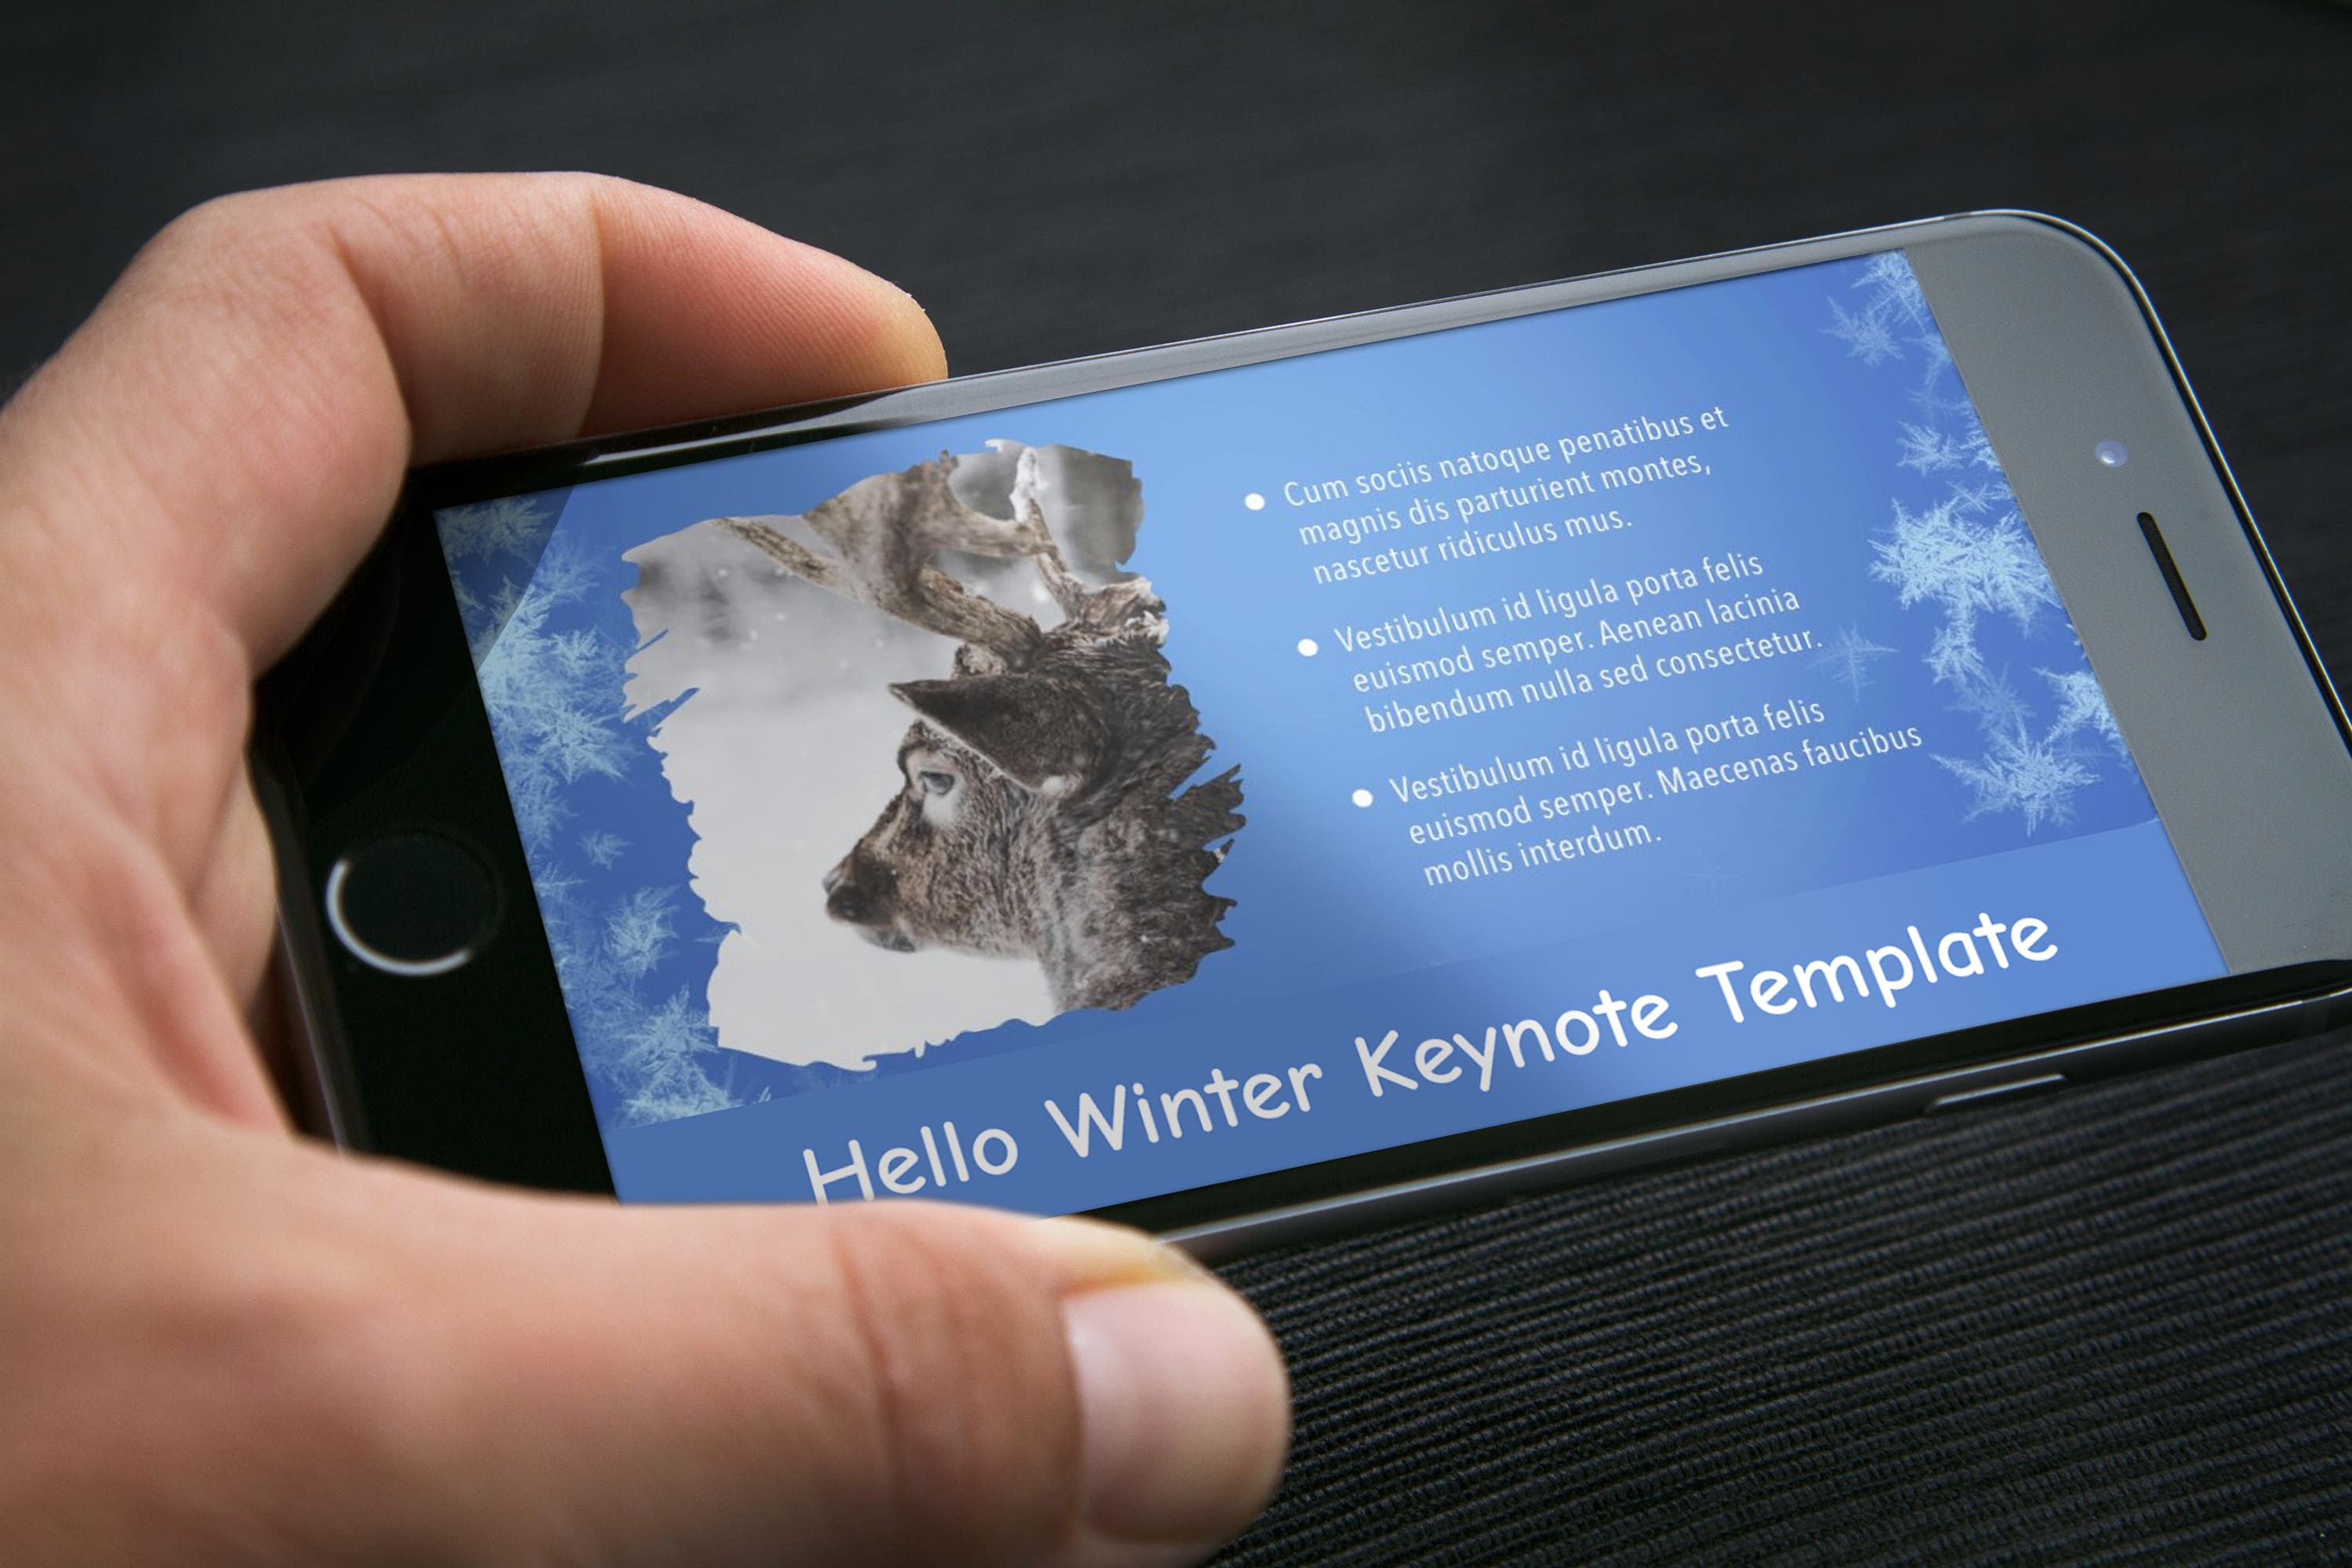 Hello Winter Keynote Template - Mockup on Smartphone.